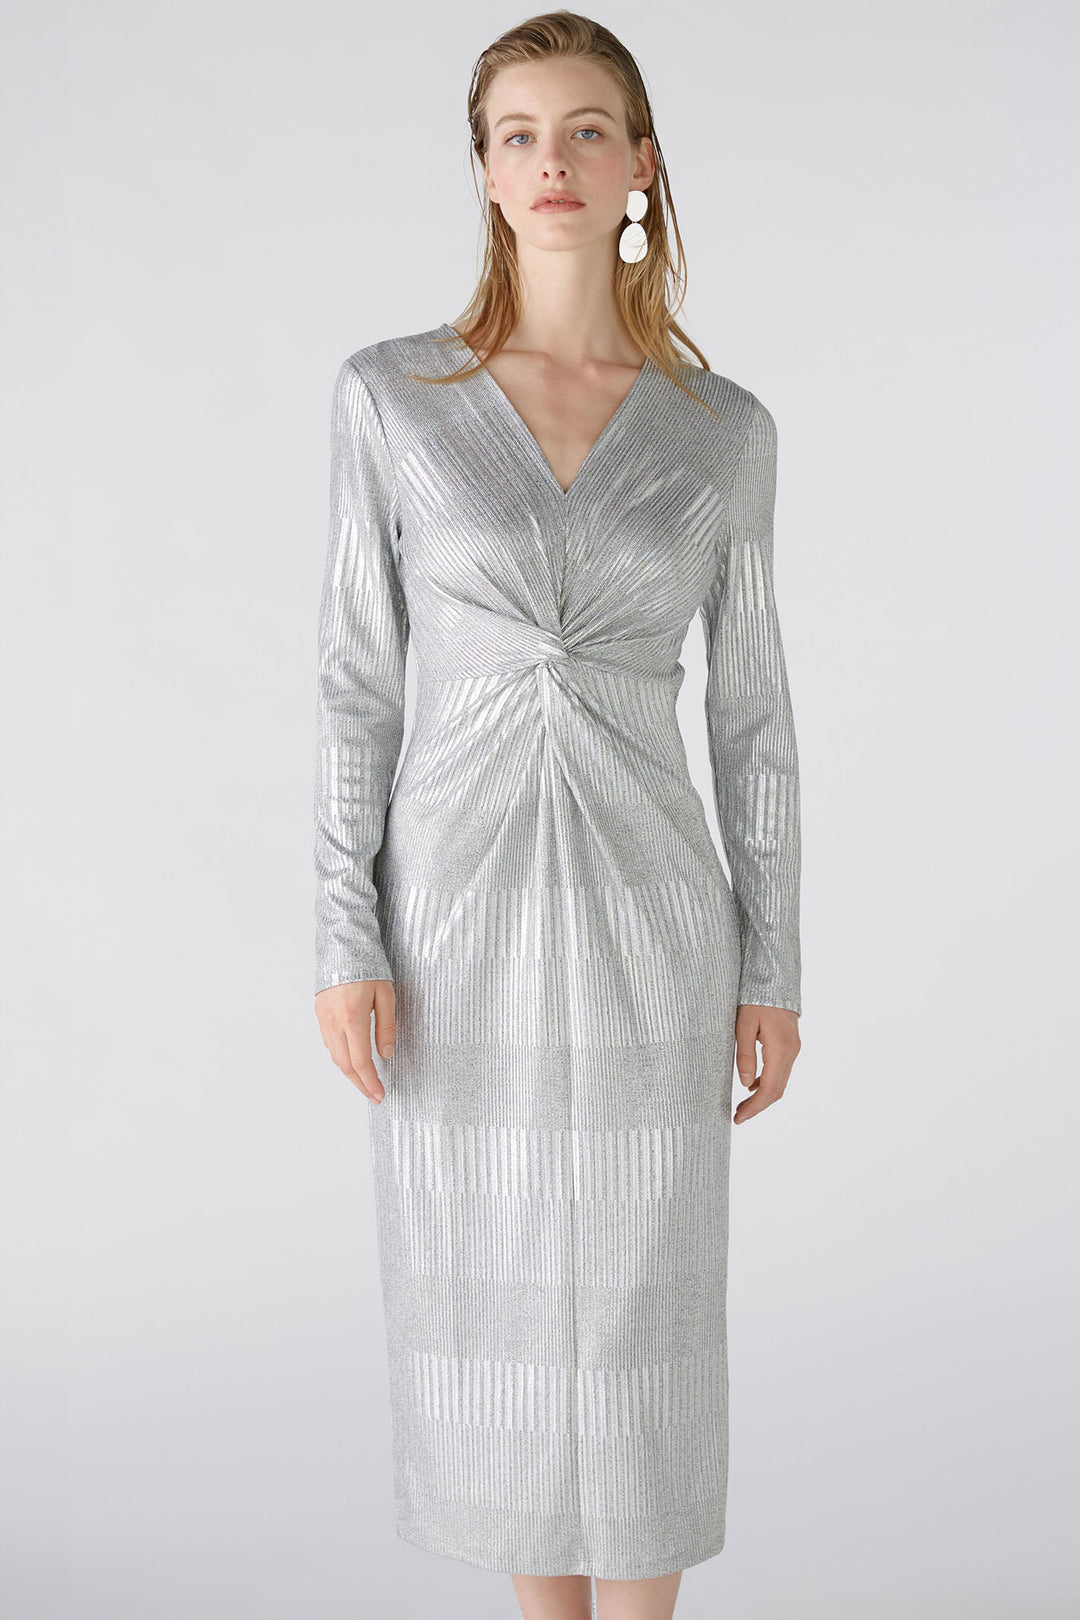 Oui Dress Silver Gunmetal Shimmer Long Sleeve Knot Front 89030-9674 - Olivia Grace Fashion